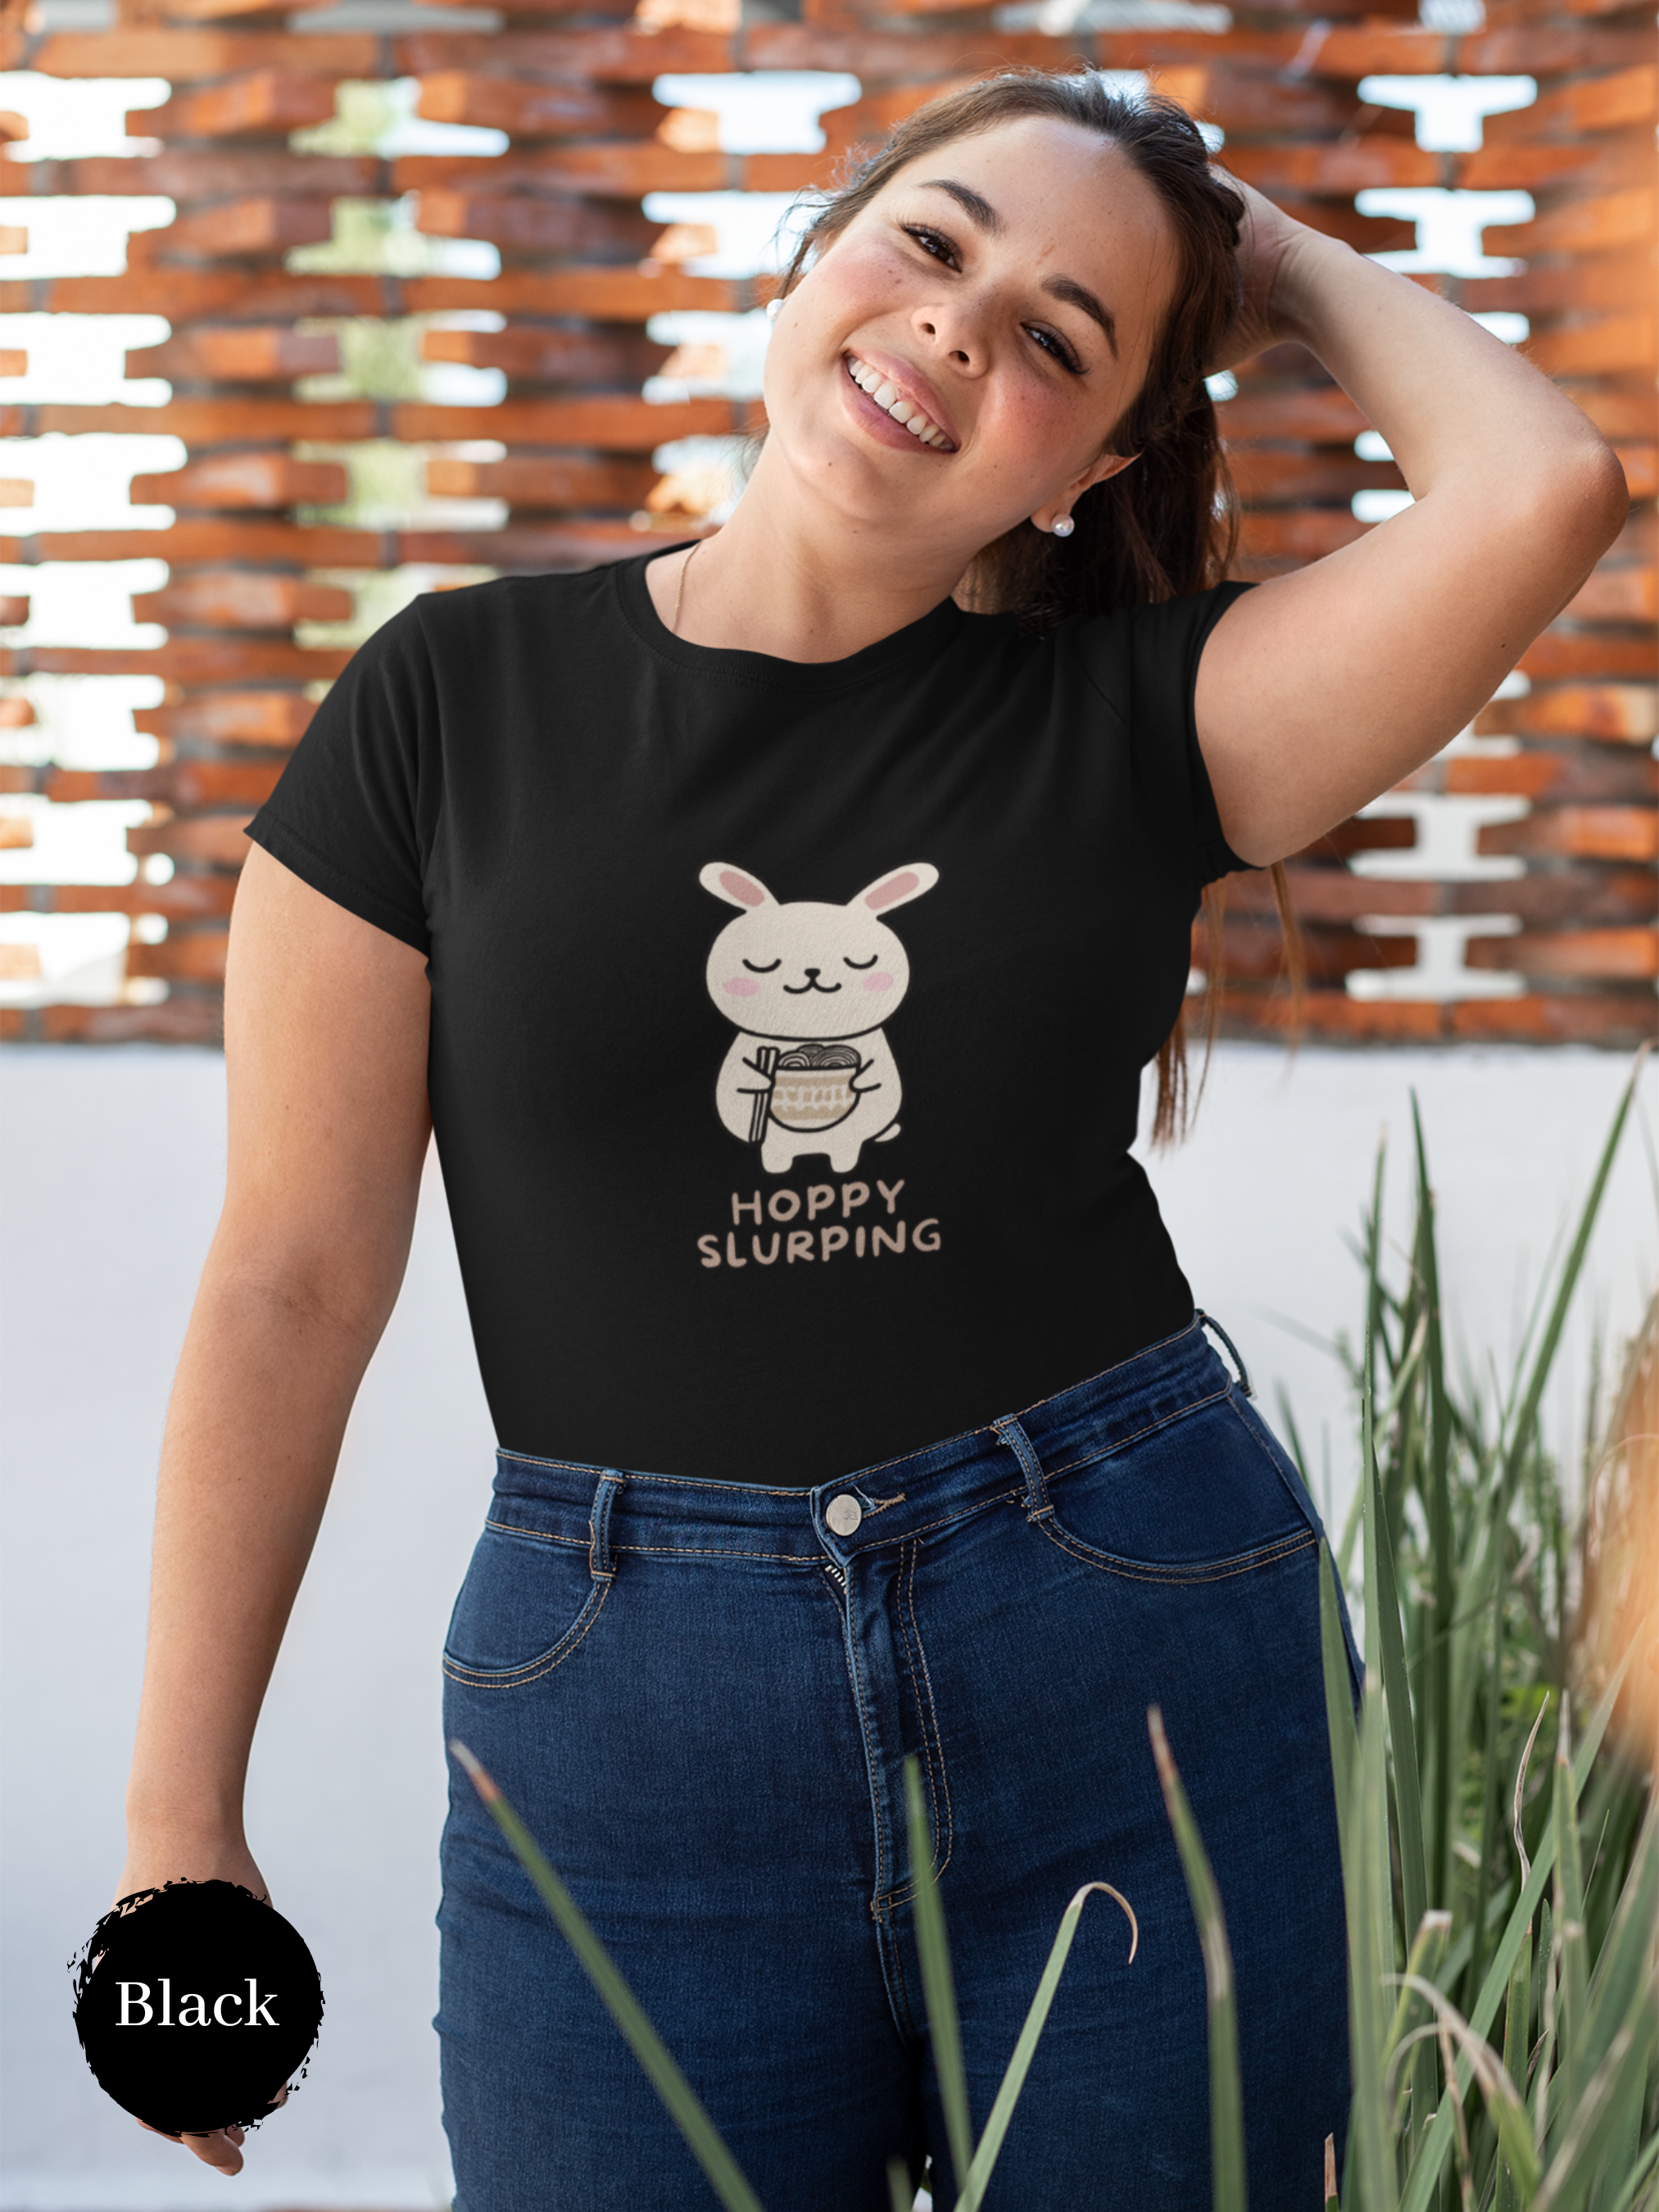 Ramen T-Shirt: Hoppy Slurping Japanese Foodie Shirt with Cute Bunny and Ramen Art